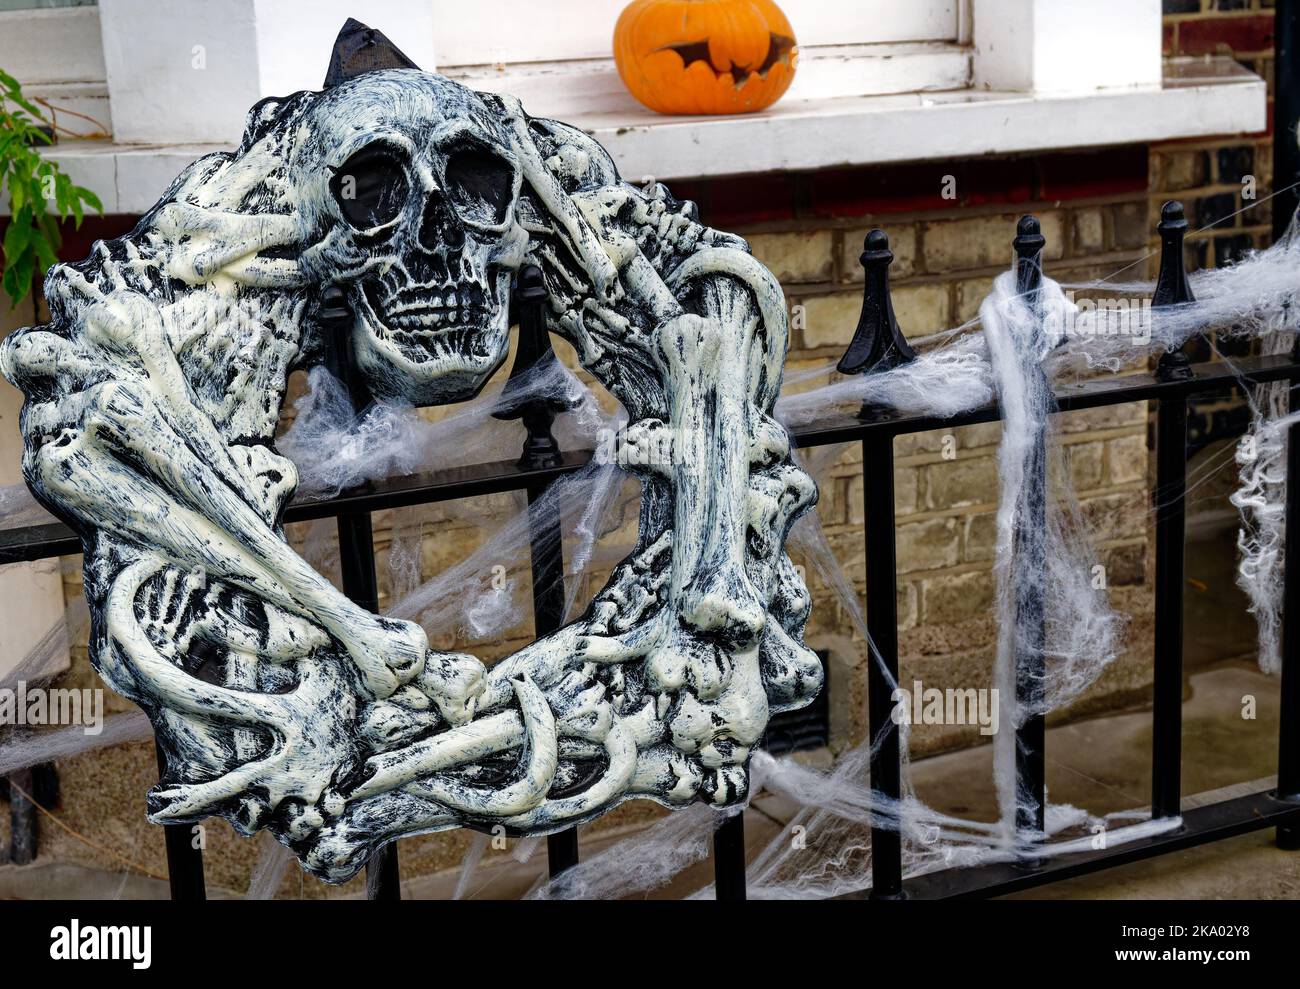 Skull and garland wreath of bones plus a pumpkin, Halloween decorations Stock Photo